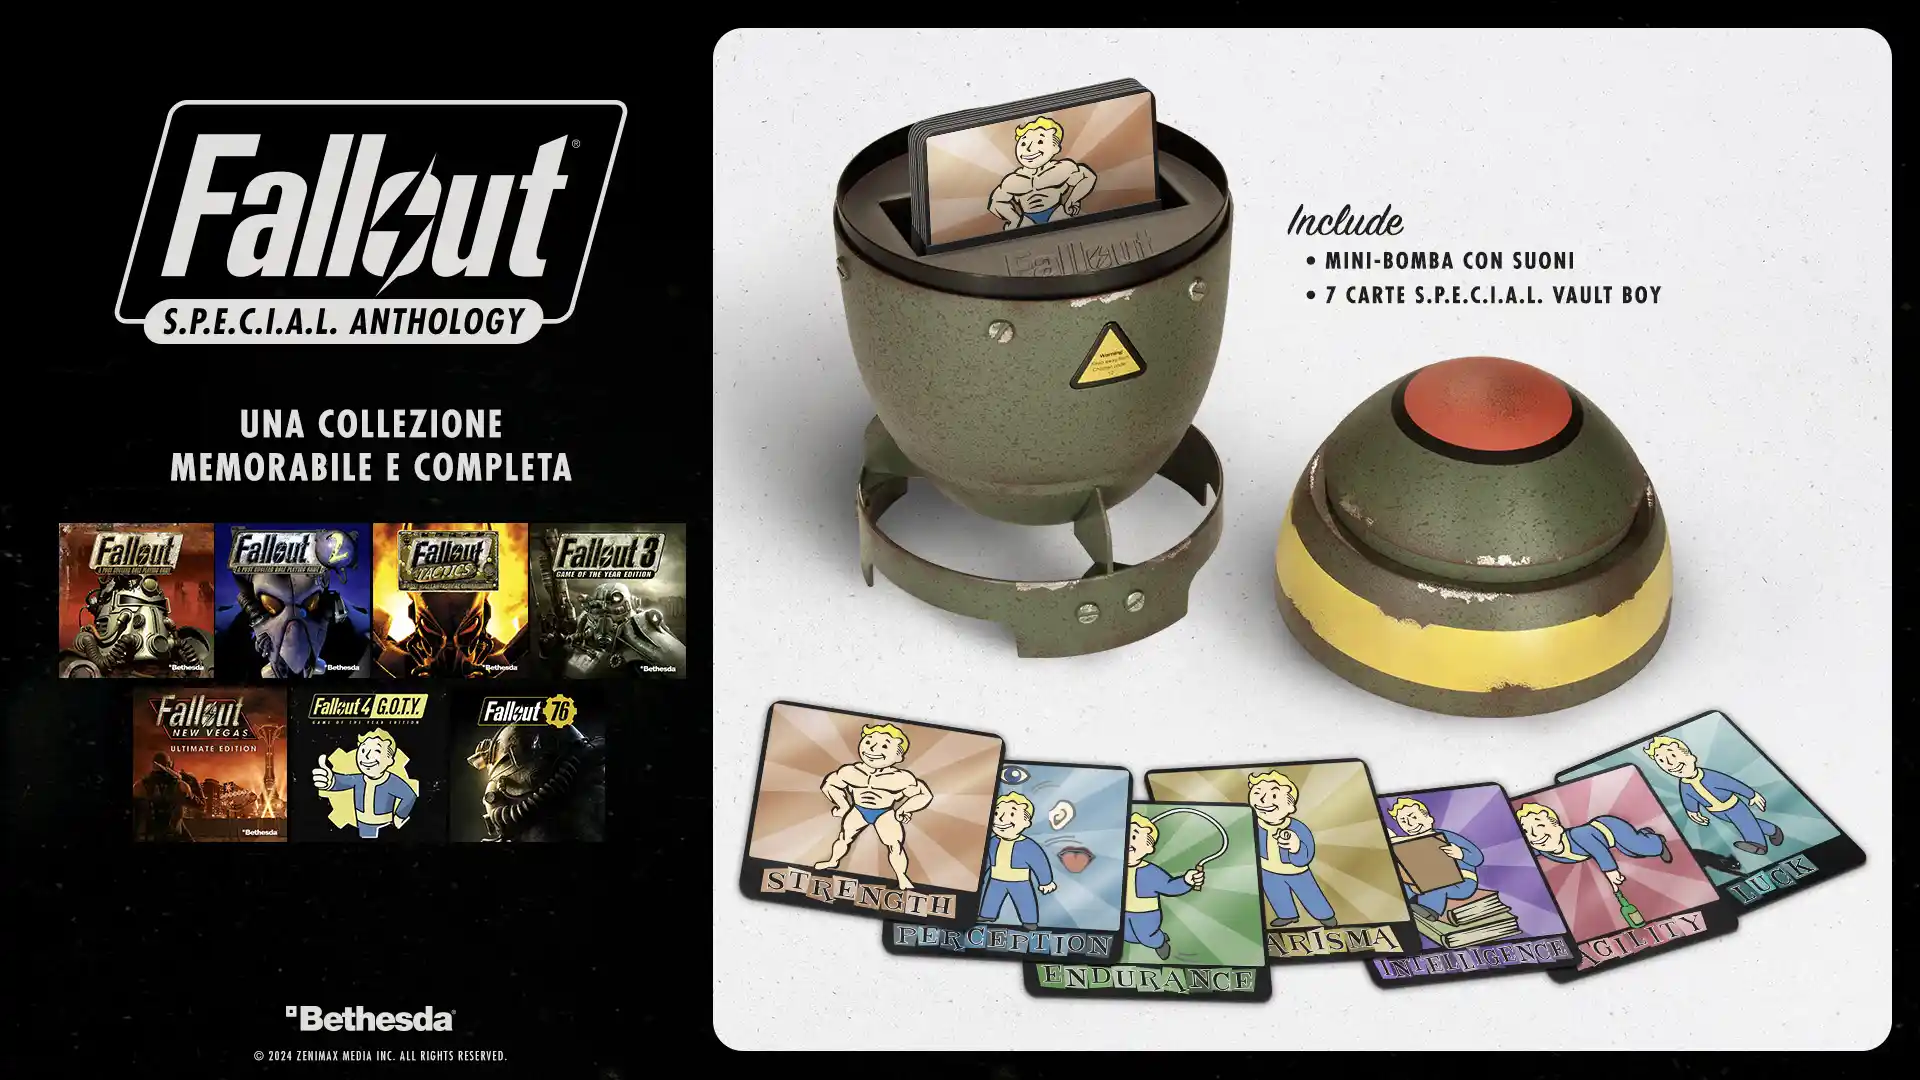 Fallout Special Anthology svelata da Bethesda: contenuti, uscita, prezzo e preorder